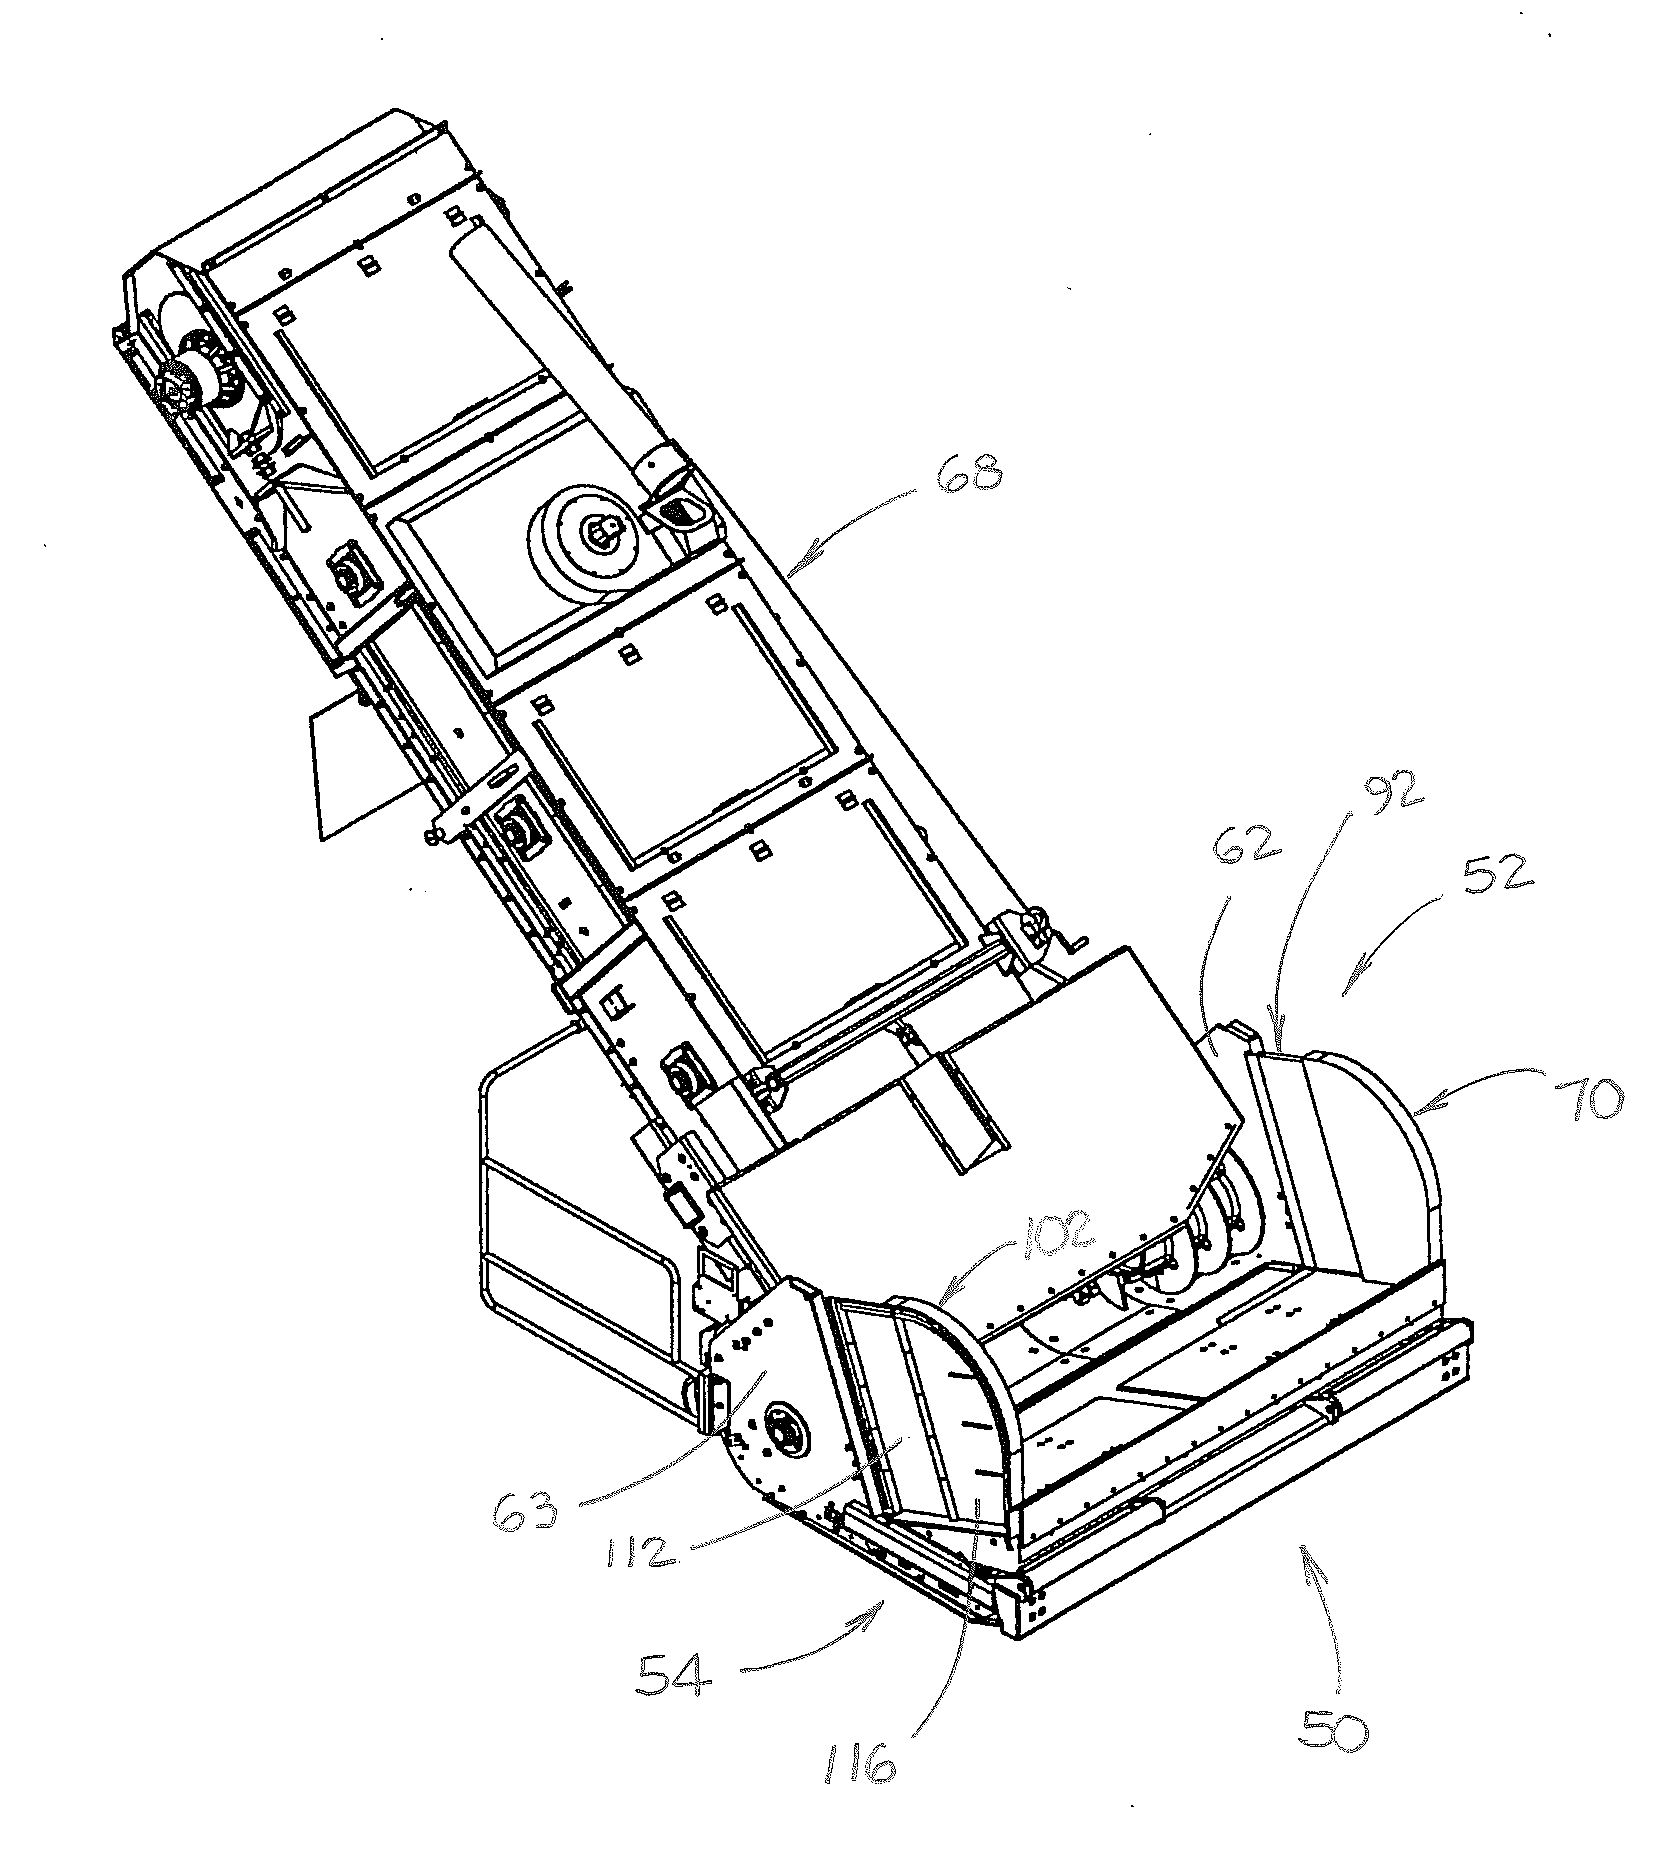 Material transfer vehicle having an expandable truck-receiving hopper